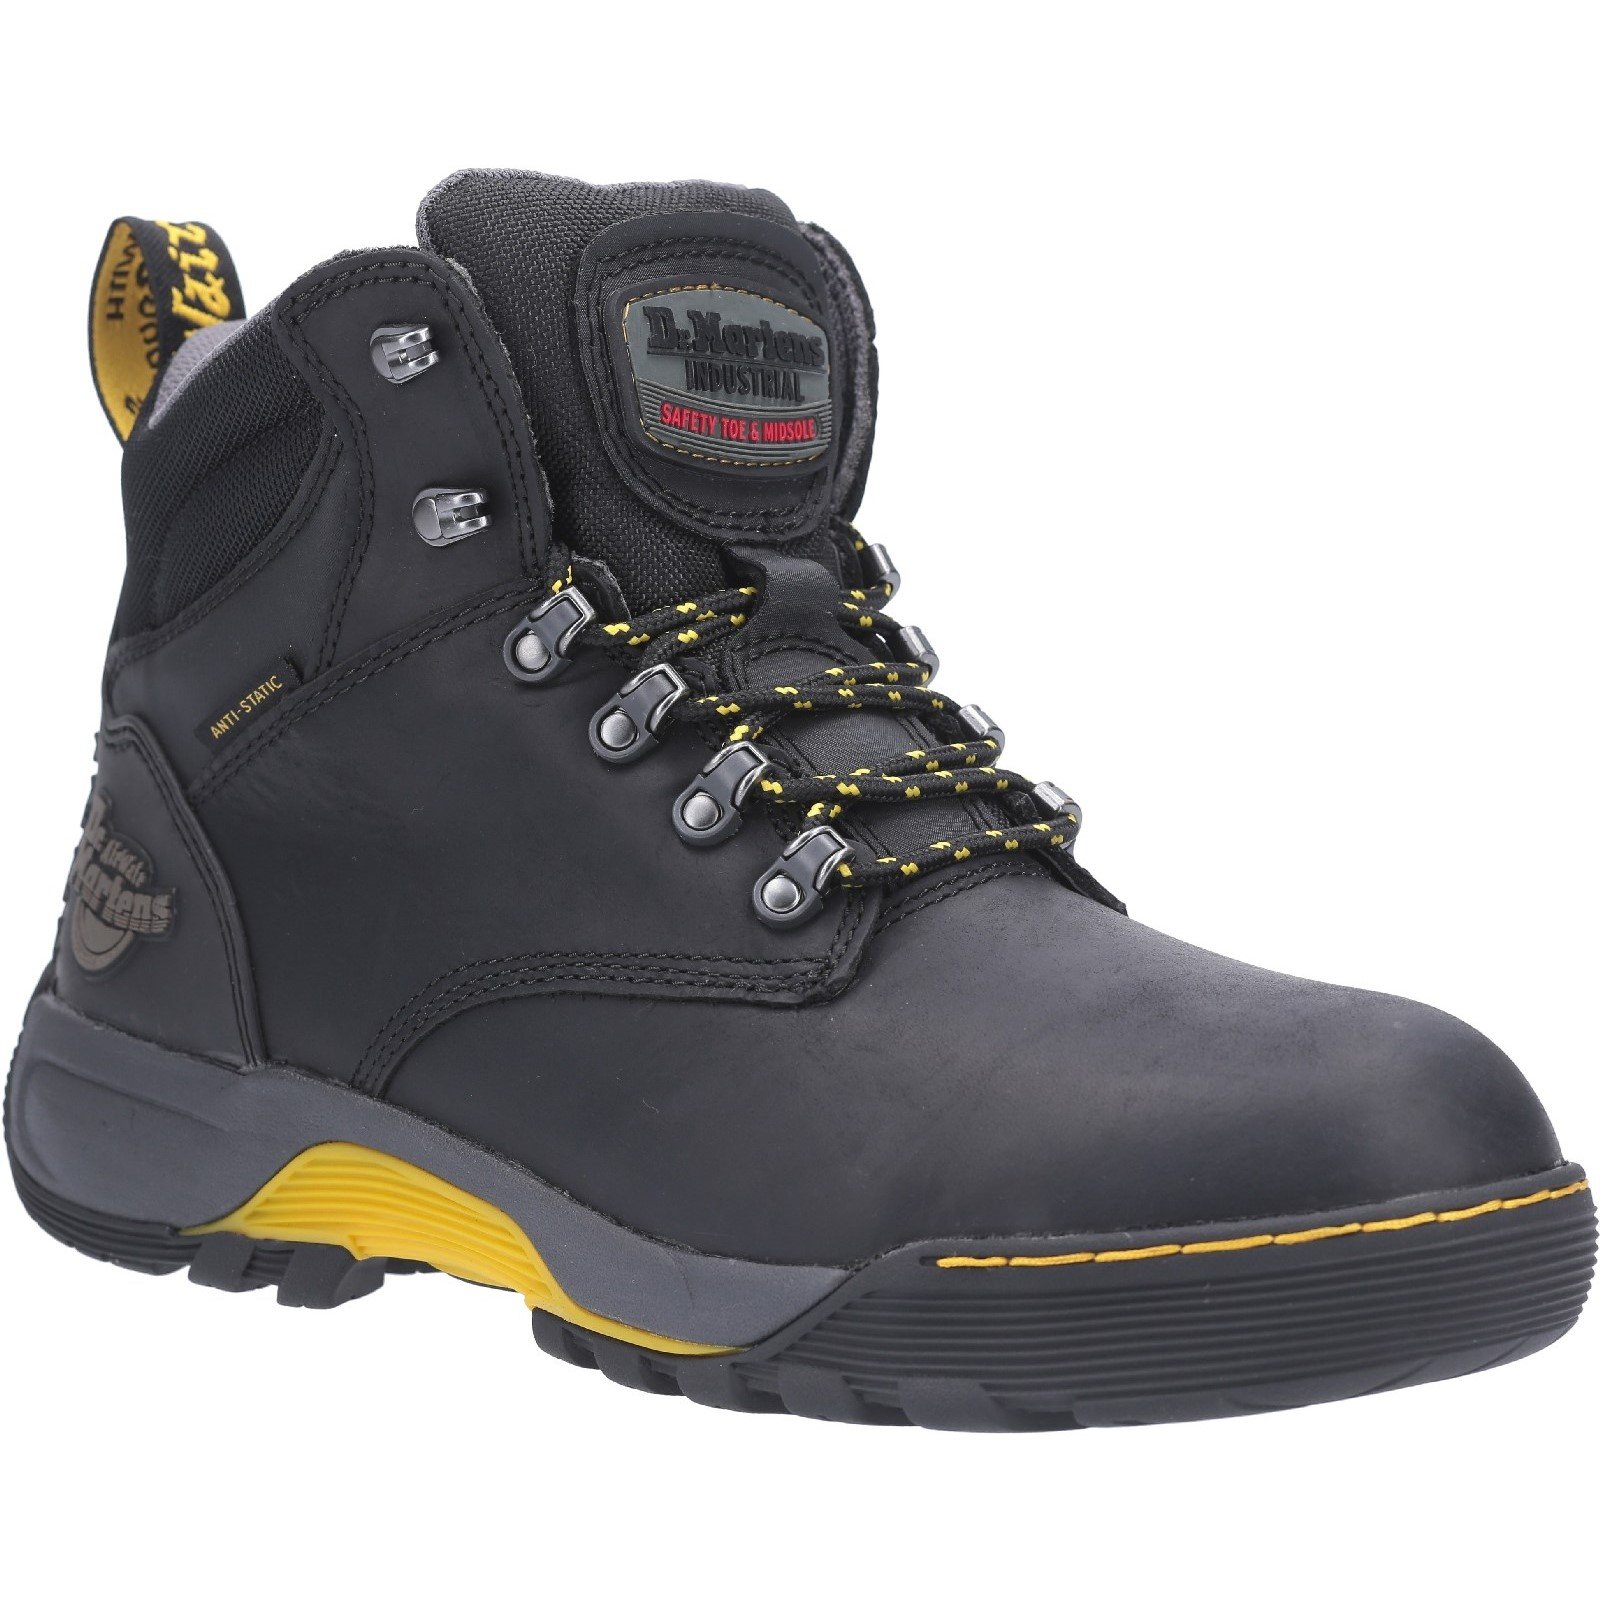 Dr Martens Unisex Ridge ST Lace Up Hiker Safety Boot Black 28324 - Black 7